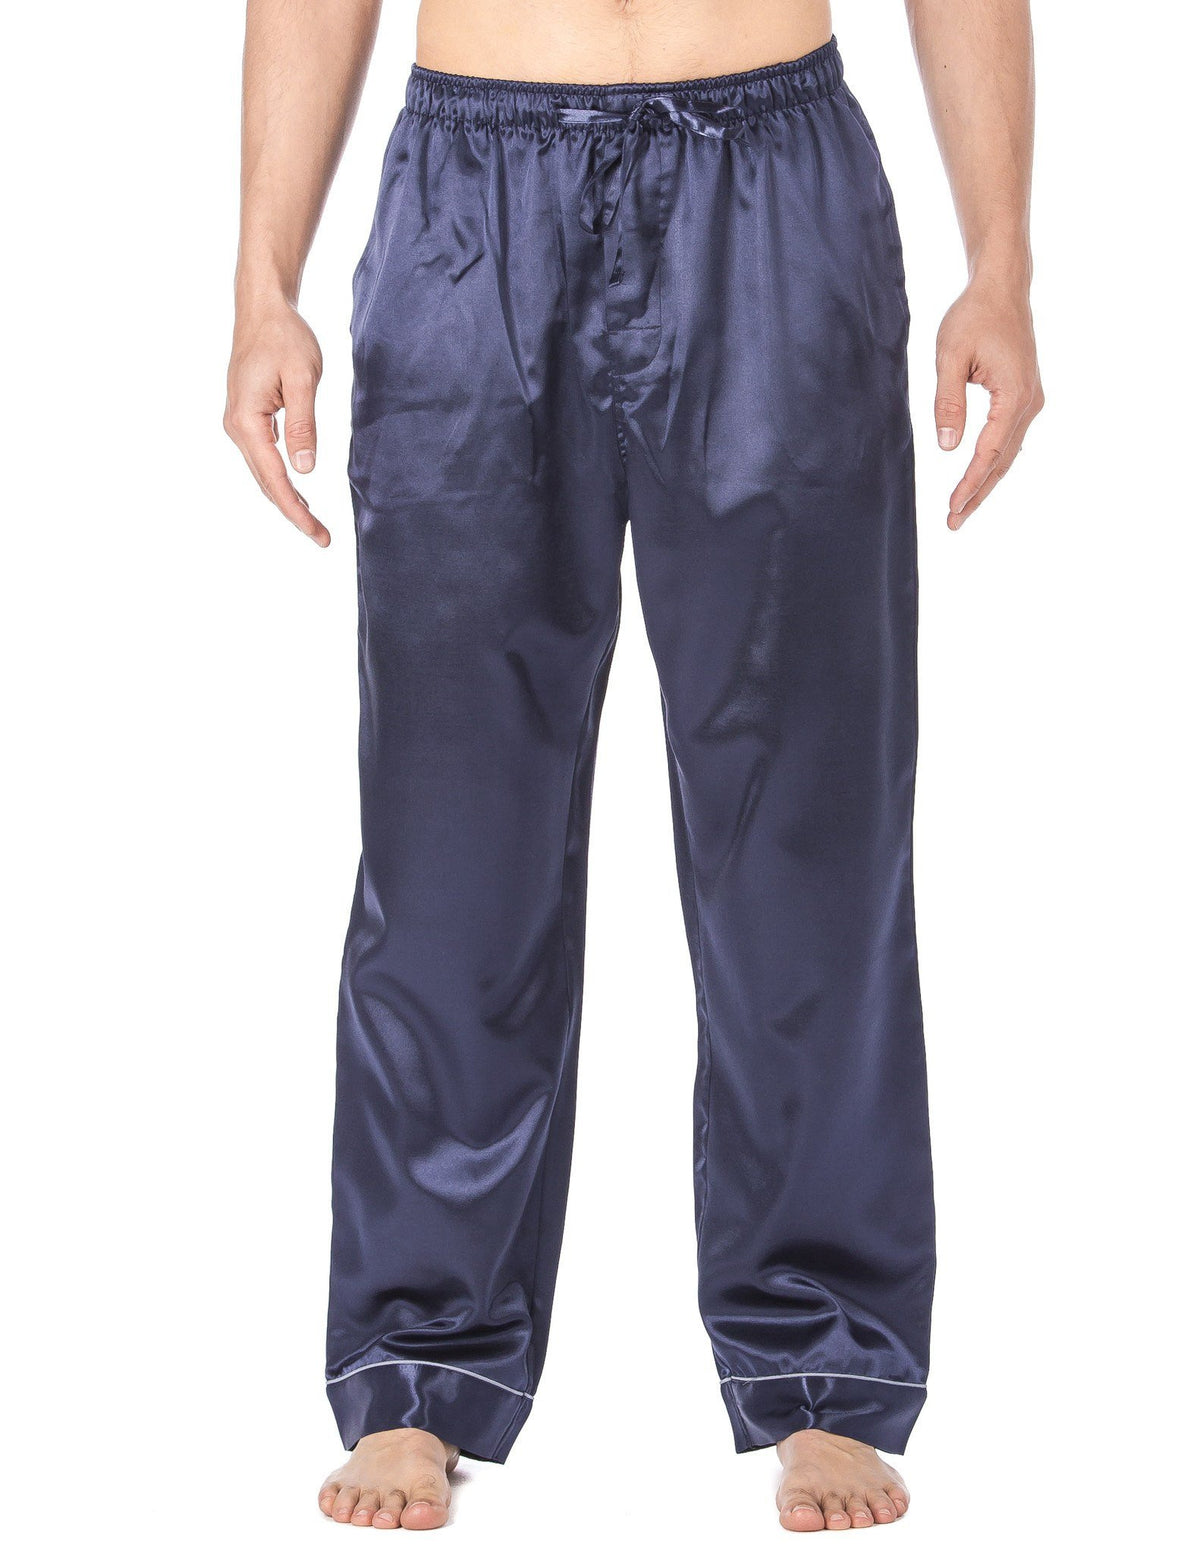 Men's Premium Satin Sleep/Lounge Pants - Solid Dark Blue